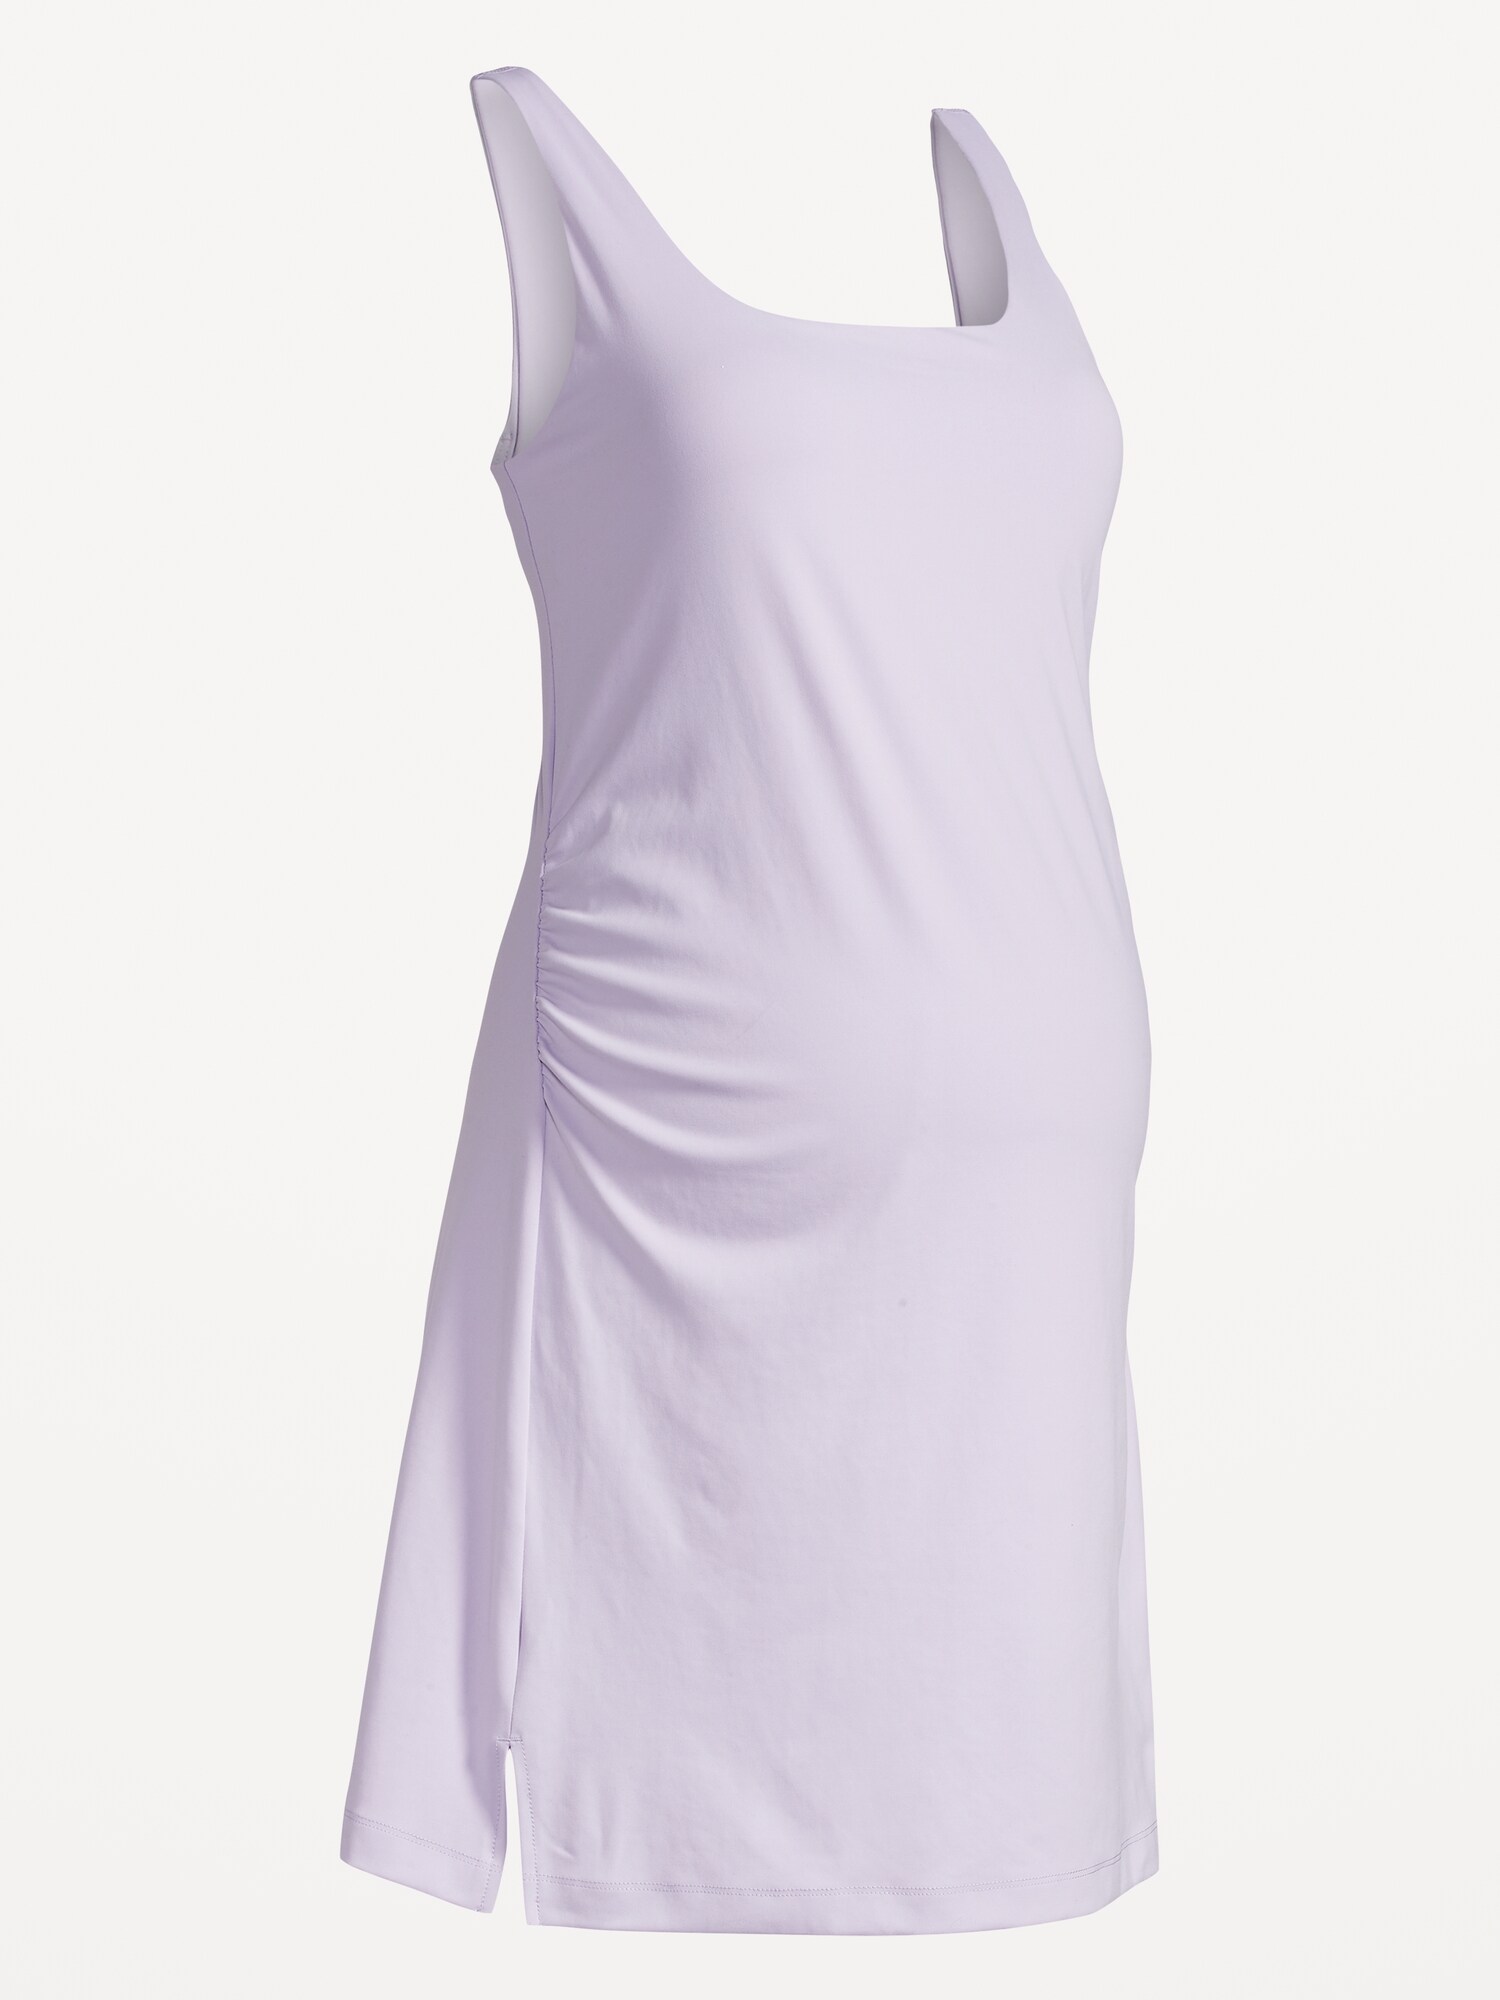 Lolmot Women's Maternity Sleeveless Tank Dress Casual Scoop Neck